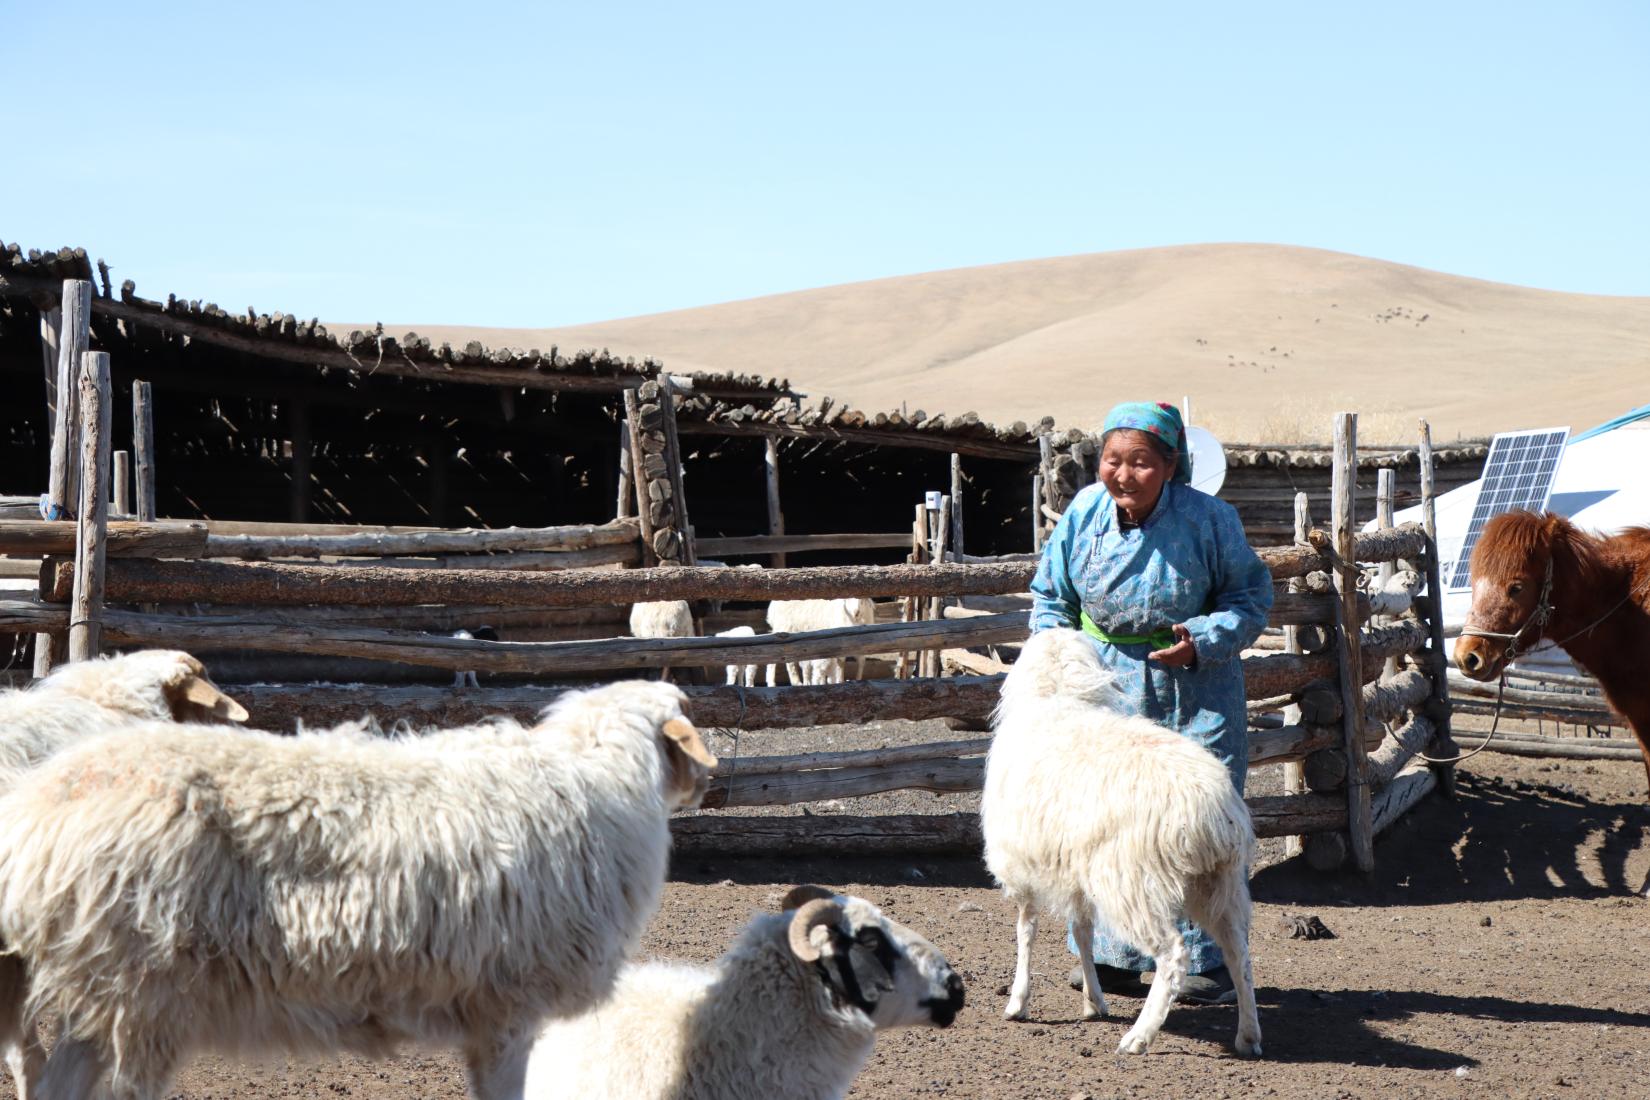 Herders spring quarter - Tapan's visit to Arkhangai